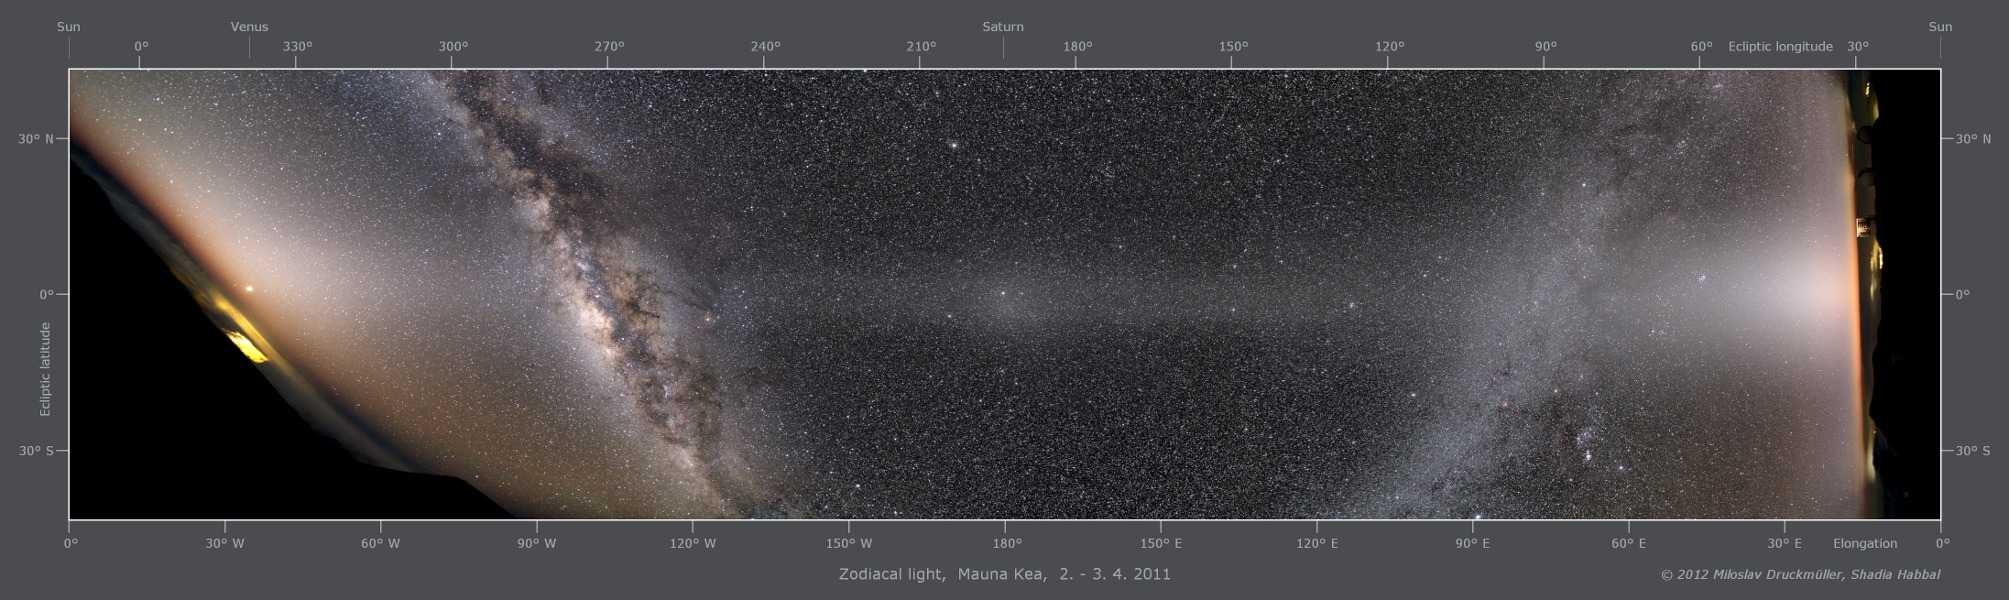 Panorama de lumière zodiacale